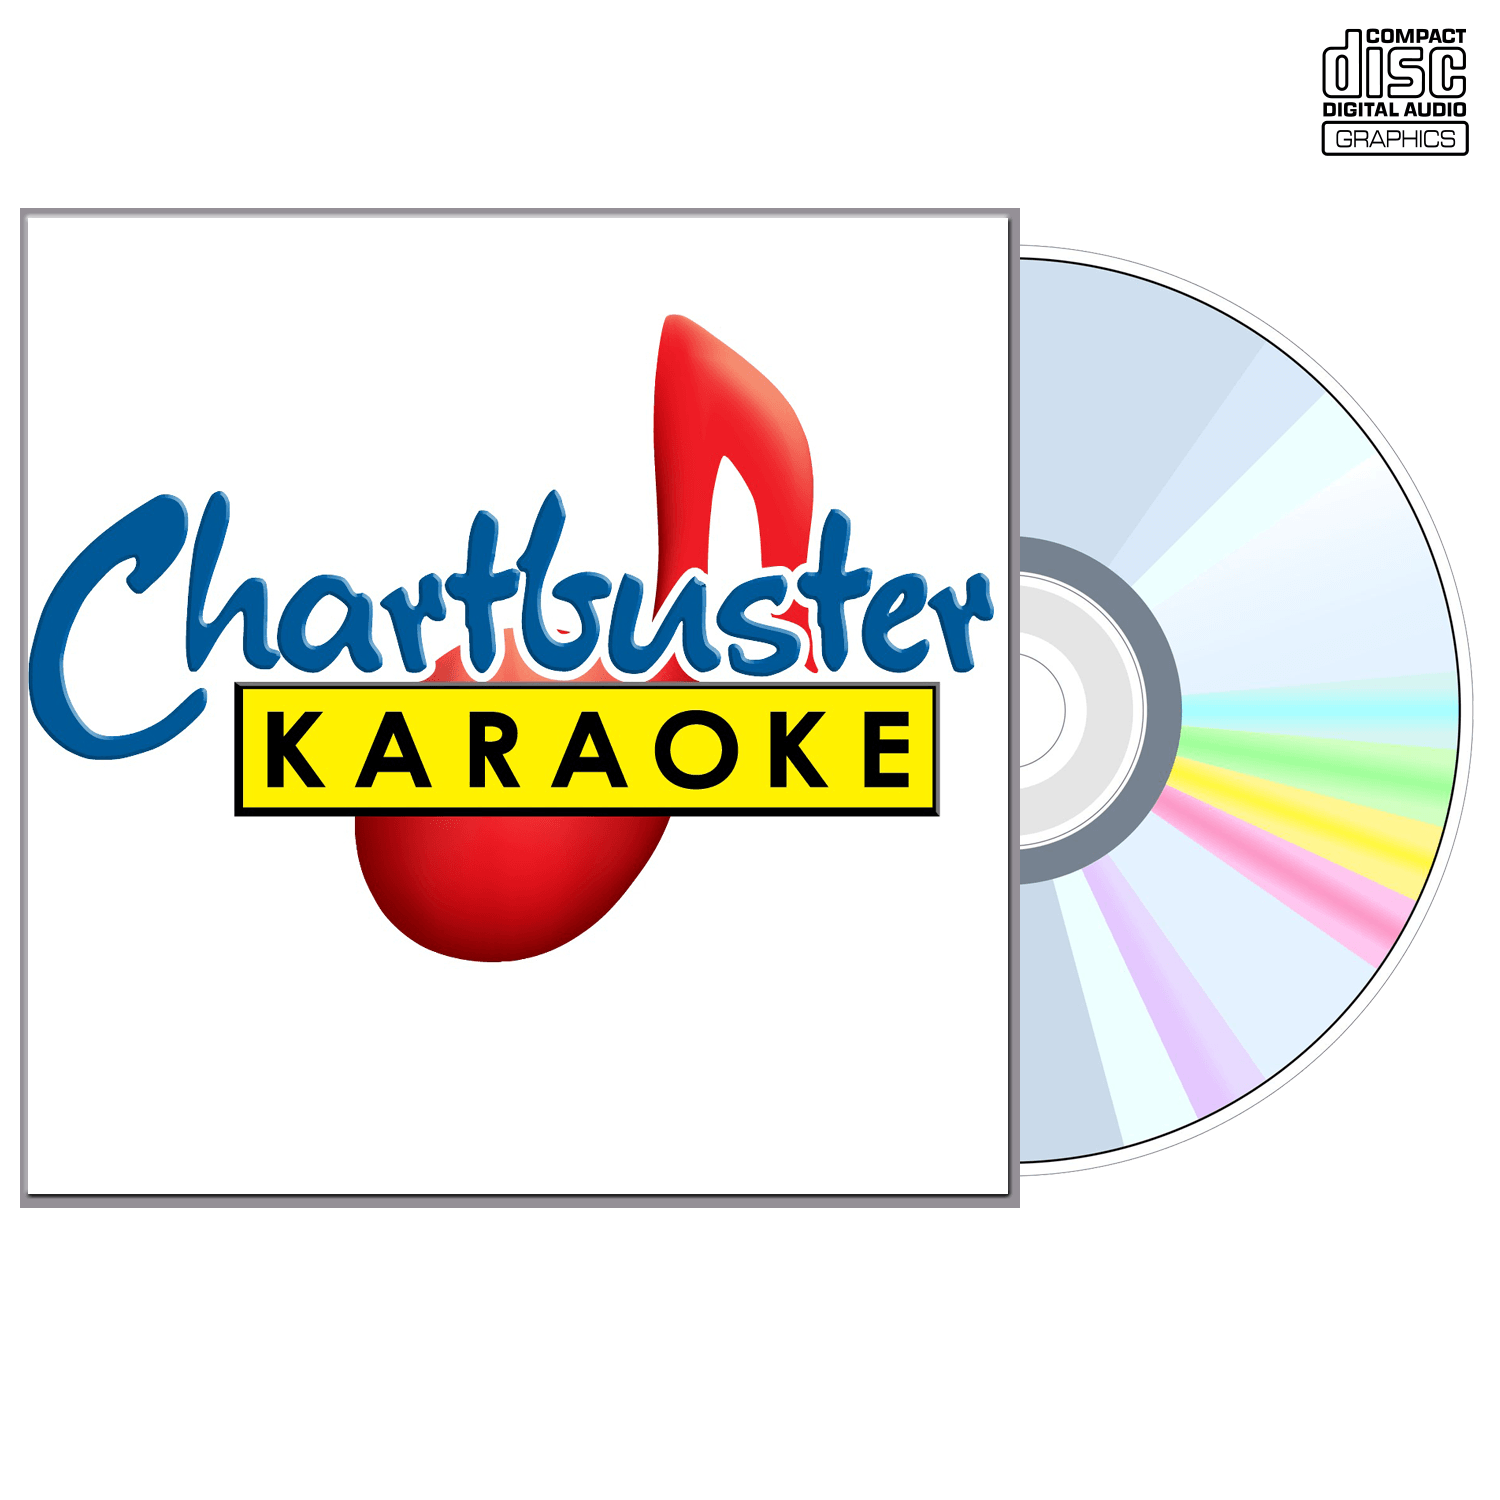 Green Day - CD+G - Chartbuster Karaoke - Karaoke Home Entertainment